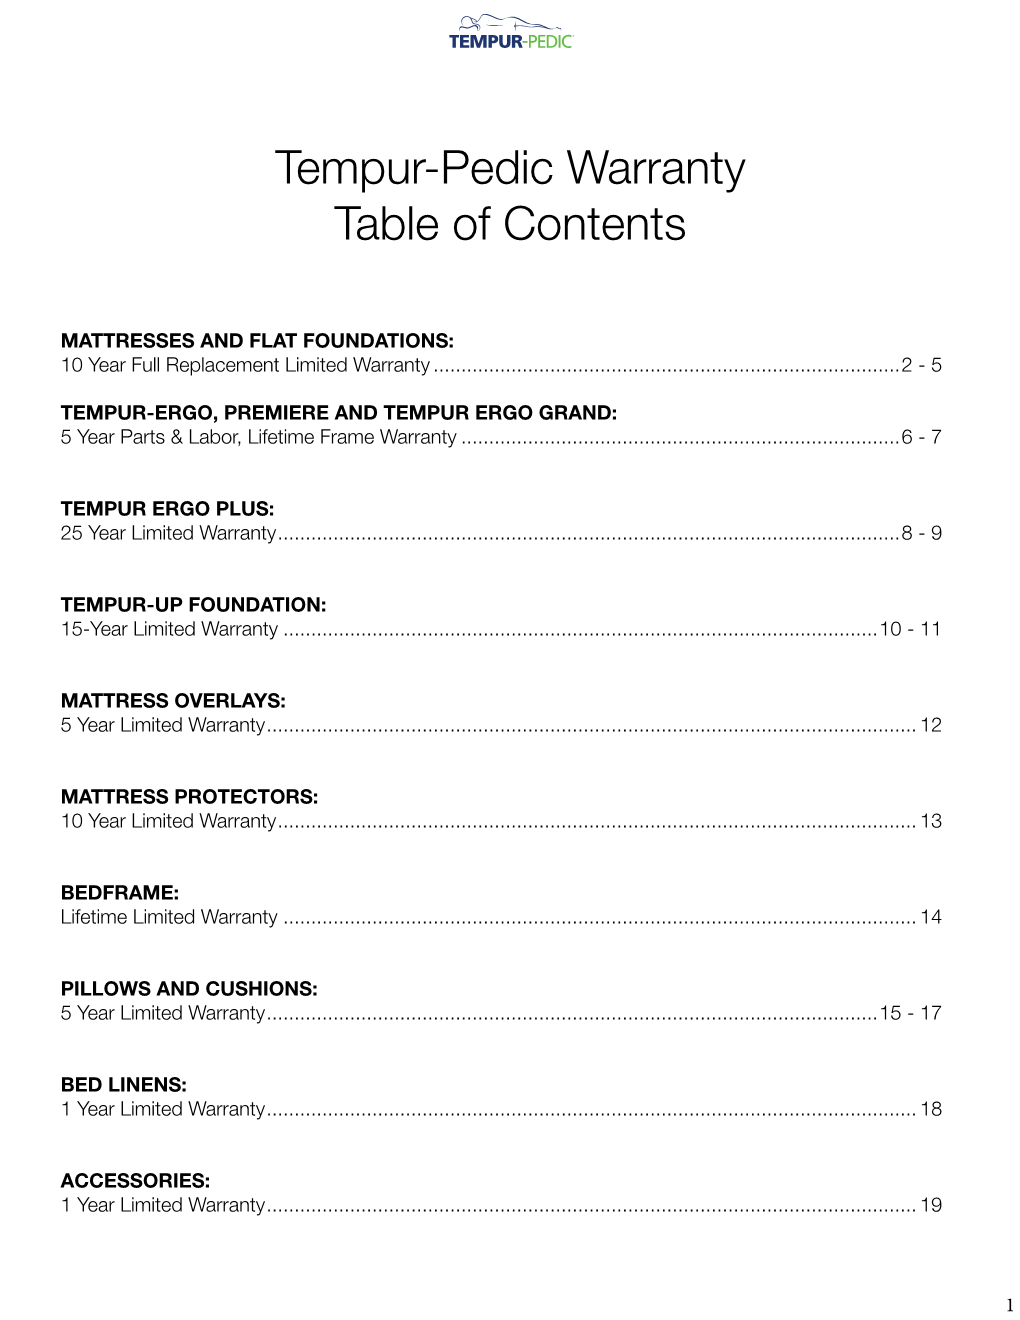 Tempur-Pedic Warranty Table of Contents